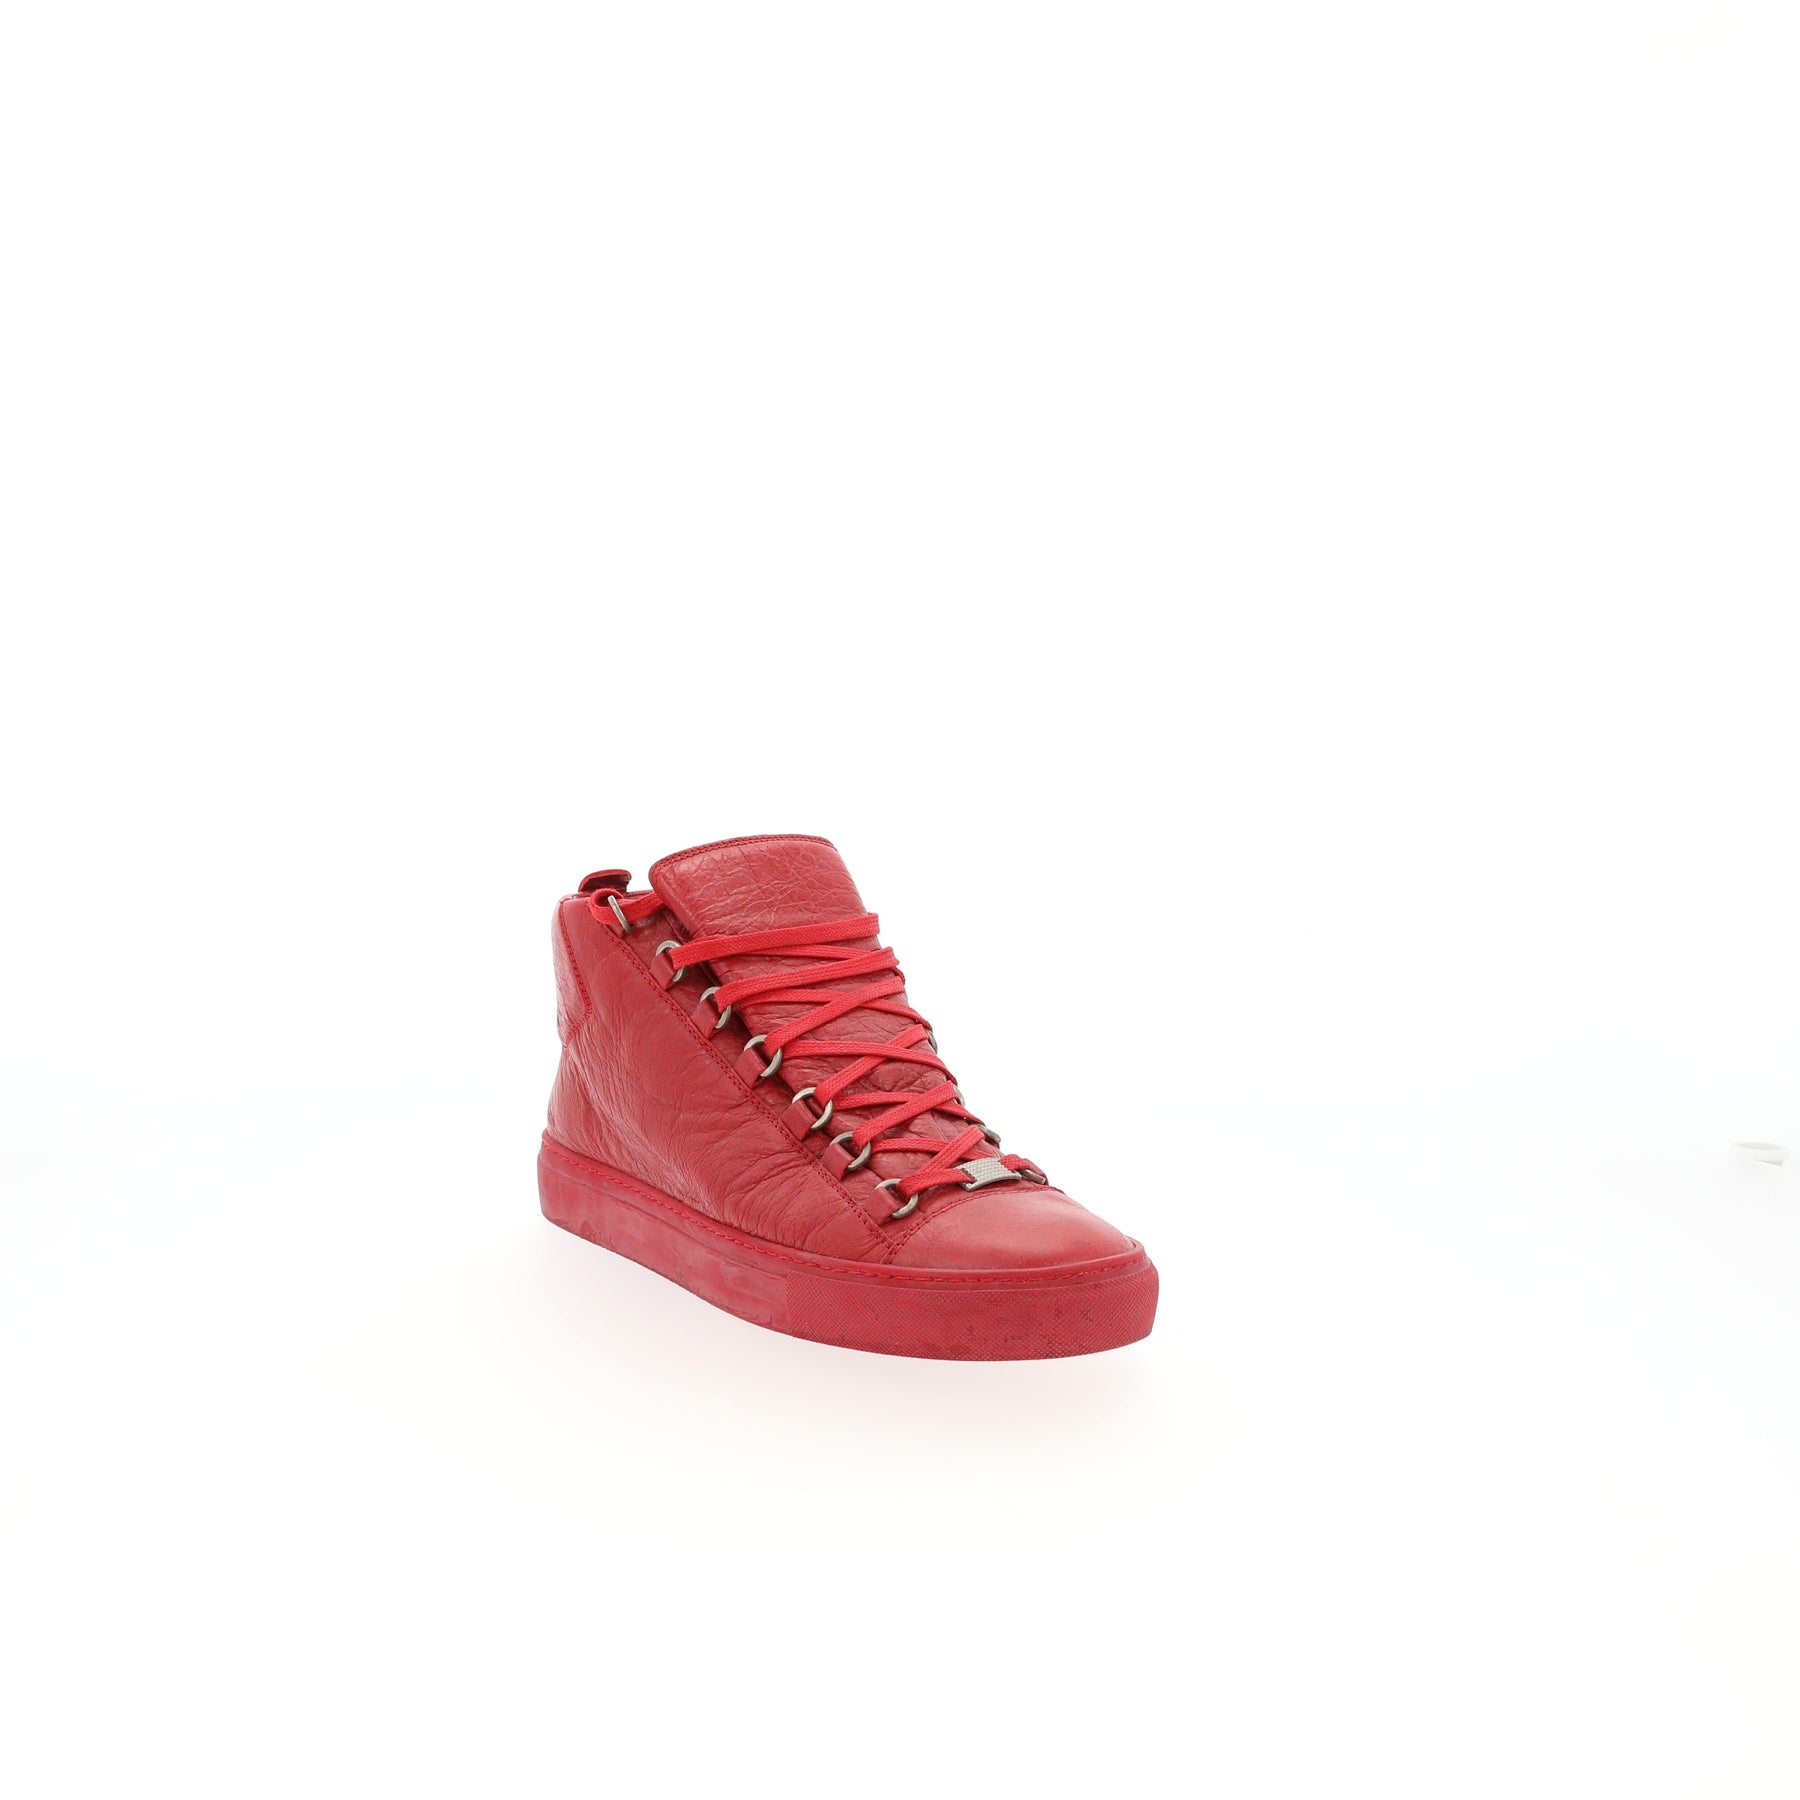 Women's luxury sneakers - Balenciaga Arena red textured lambskin sneakers